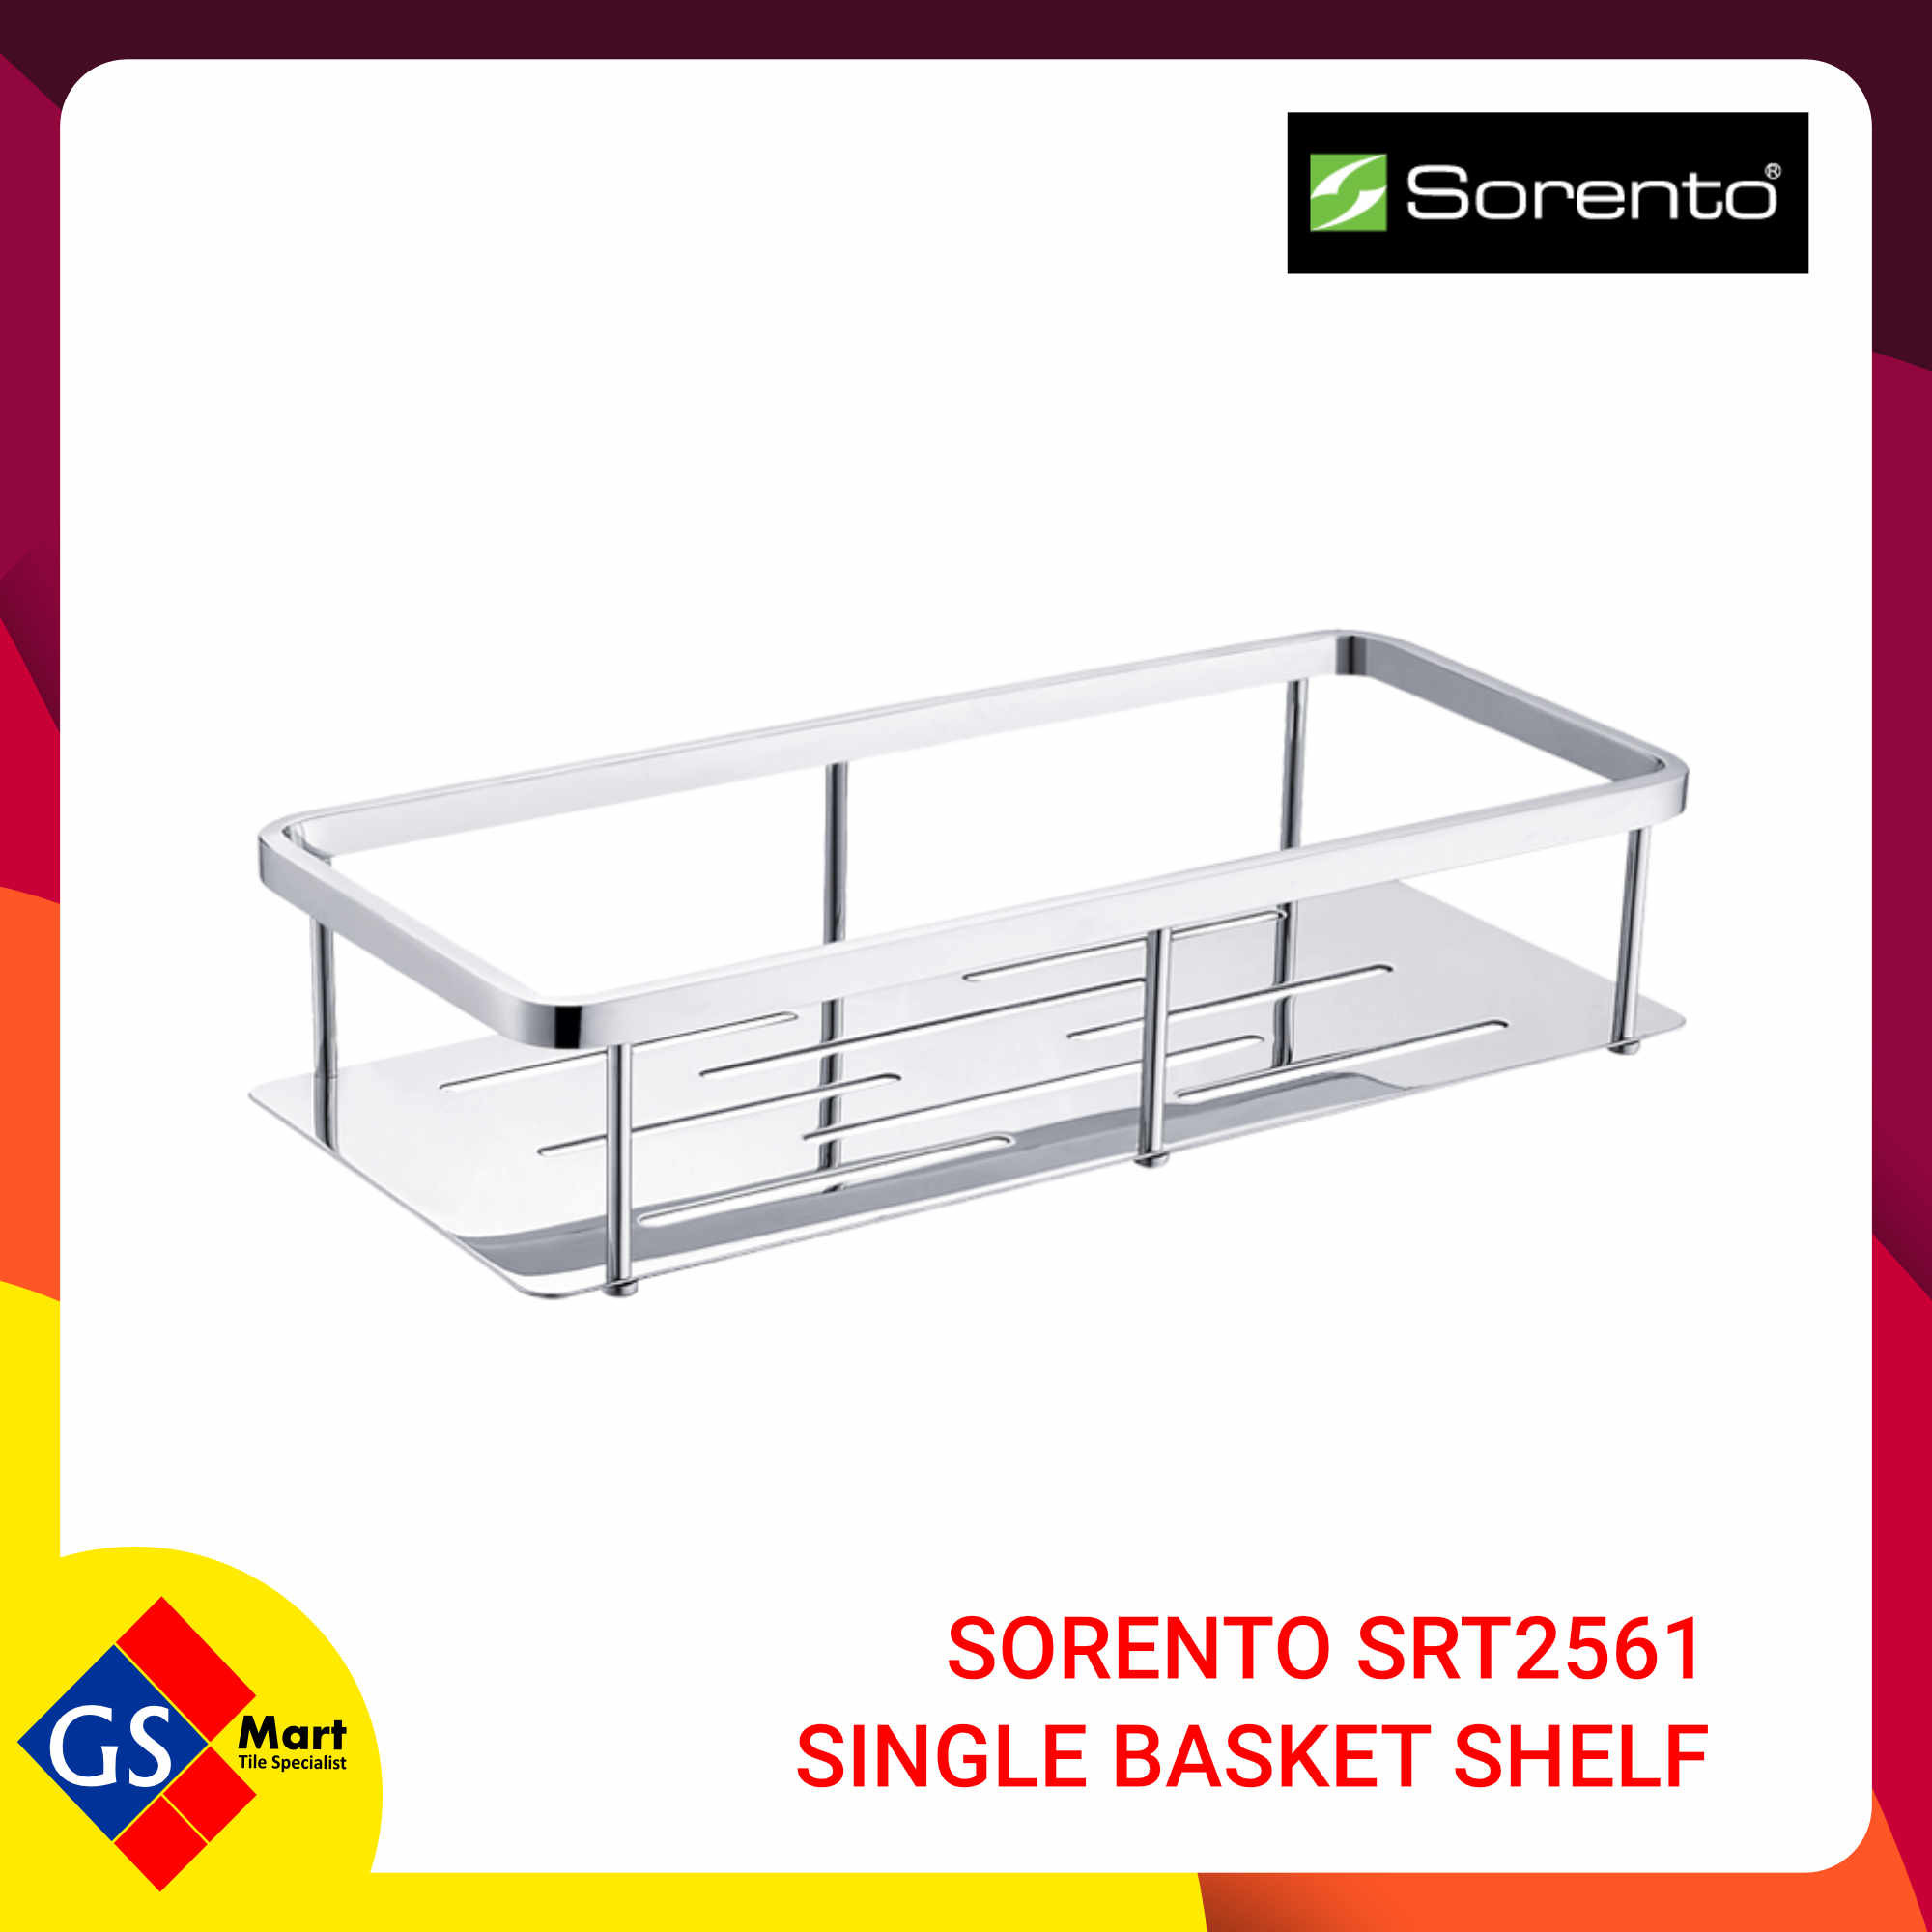 SORENTO SRT2561 SINGLE BASKET SHELF